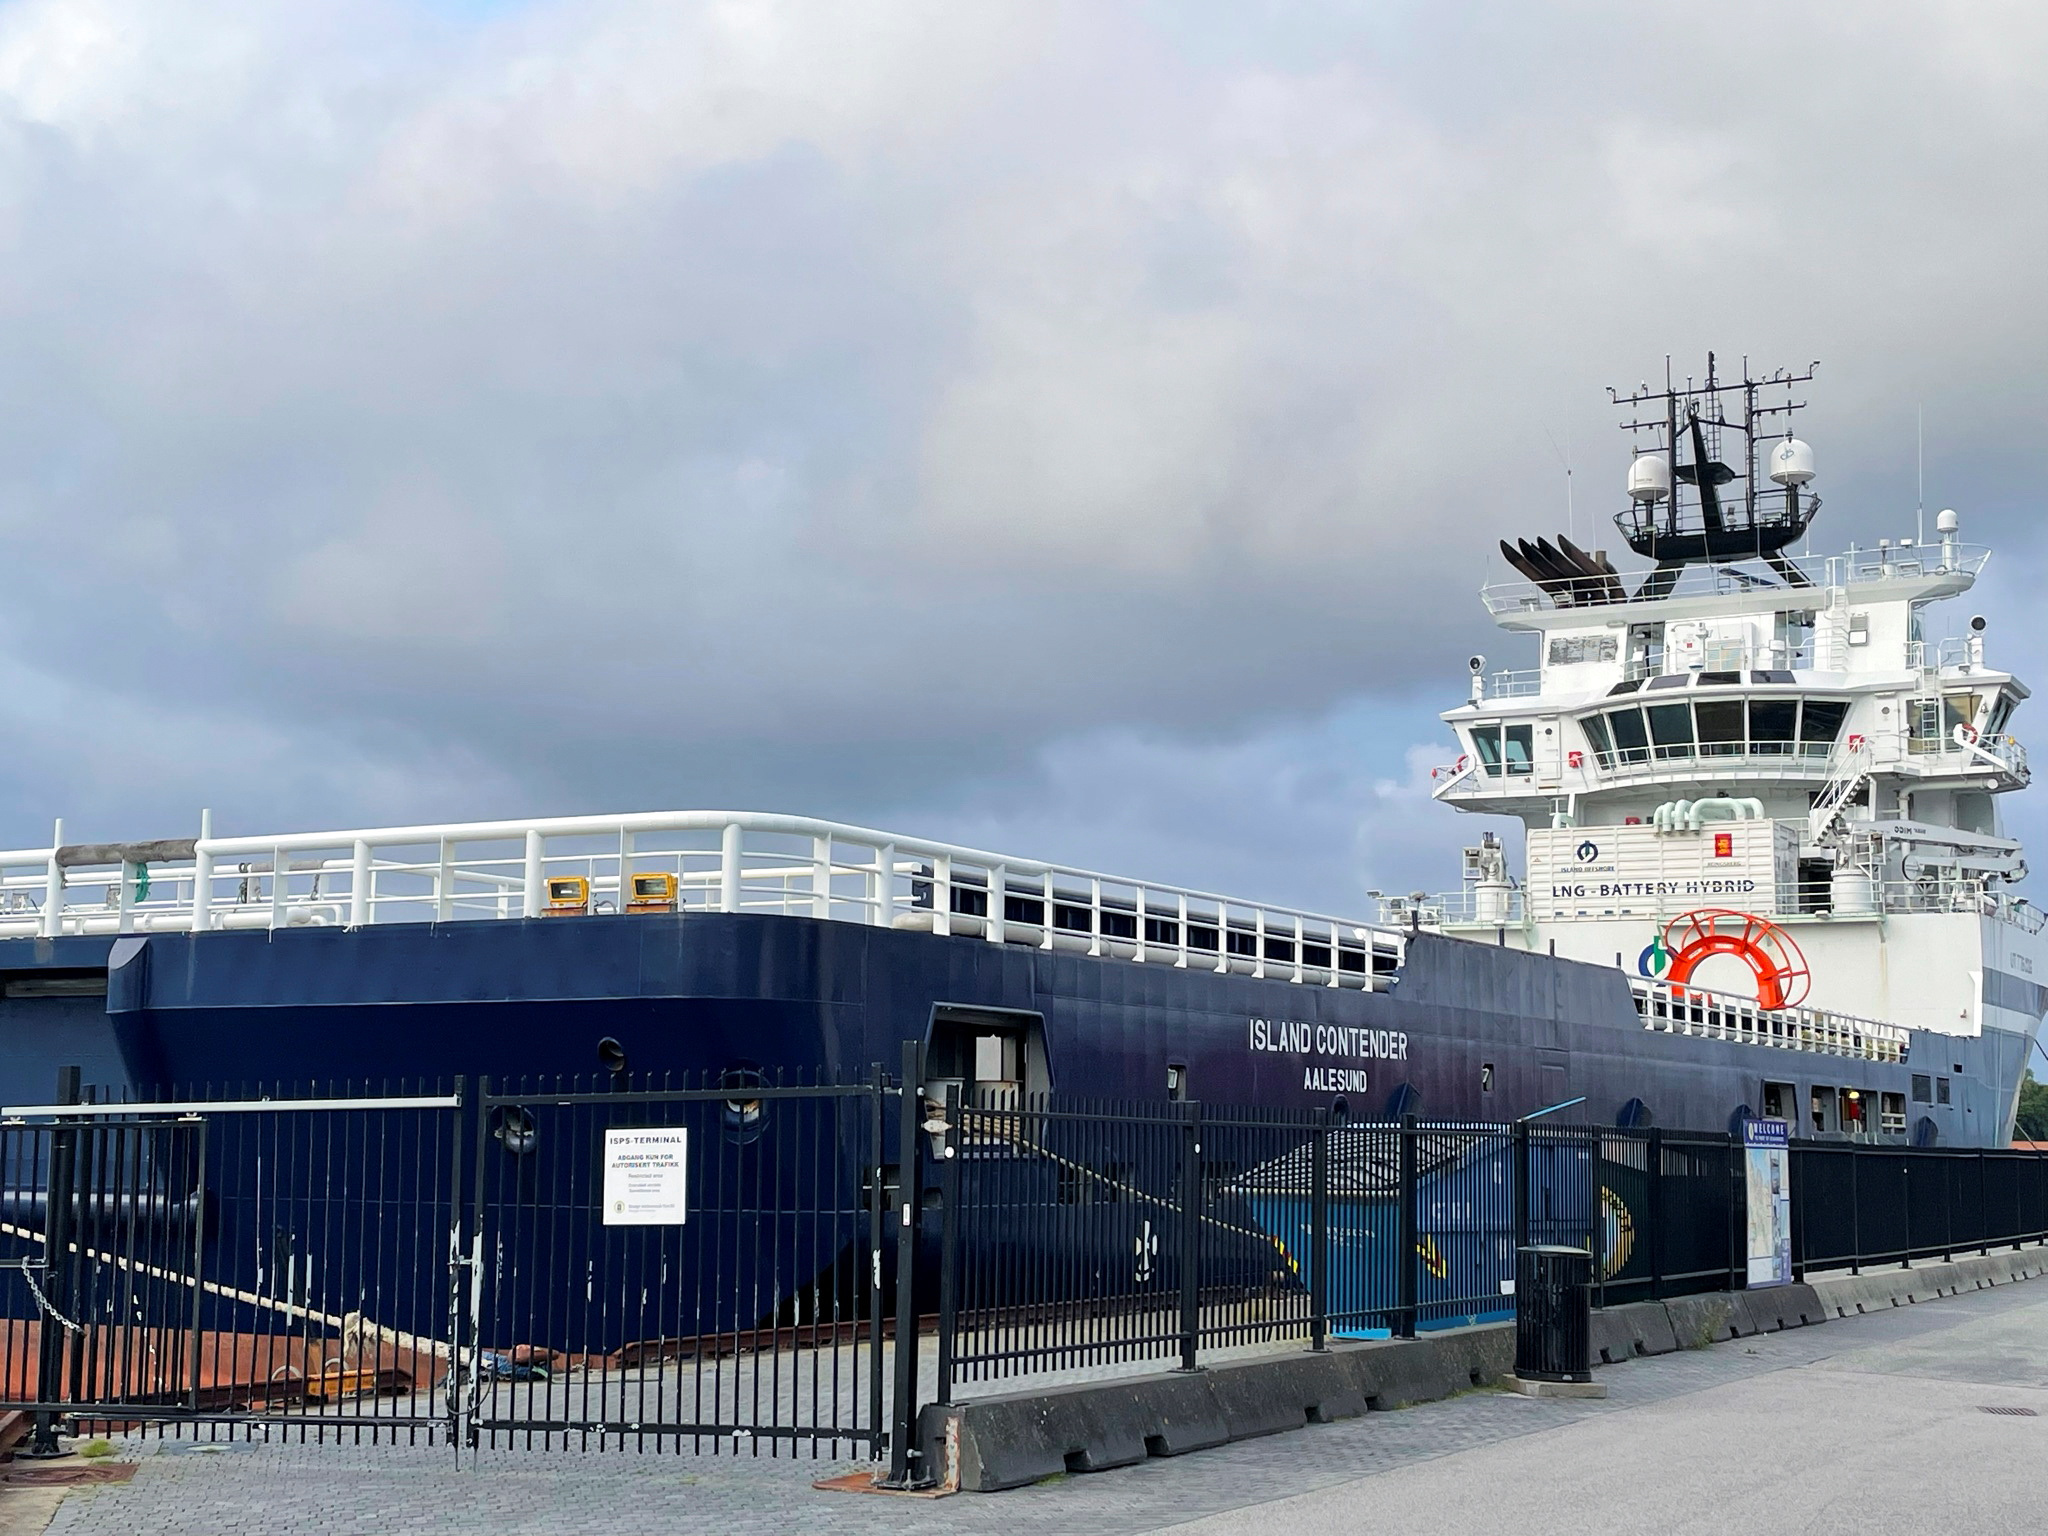 Offshore oil and gas platform supply vessel (PSV) is docked in Stavanger